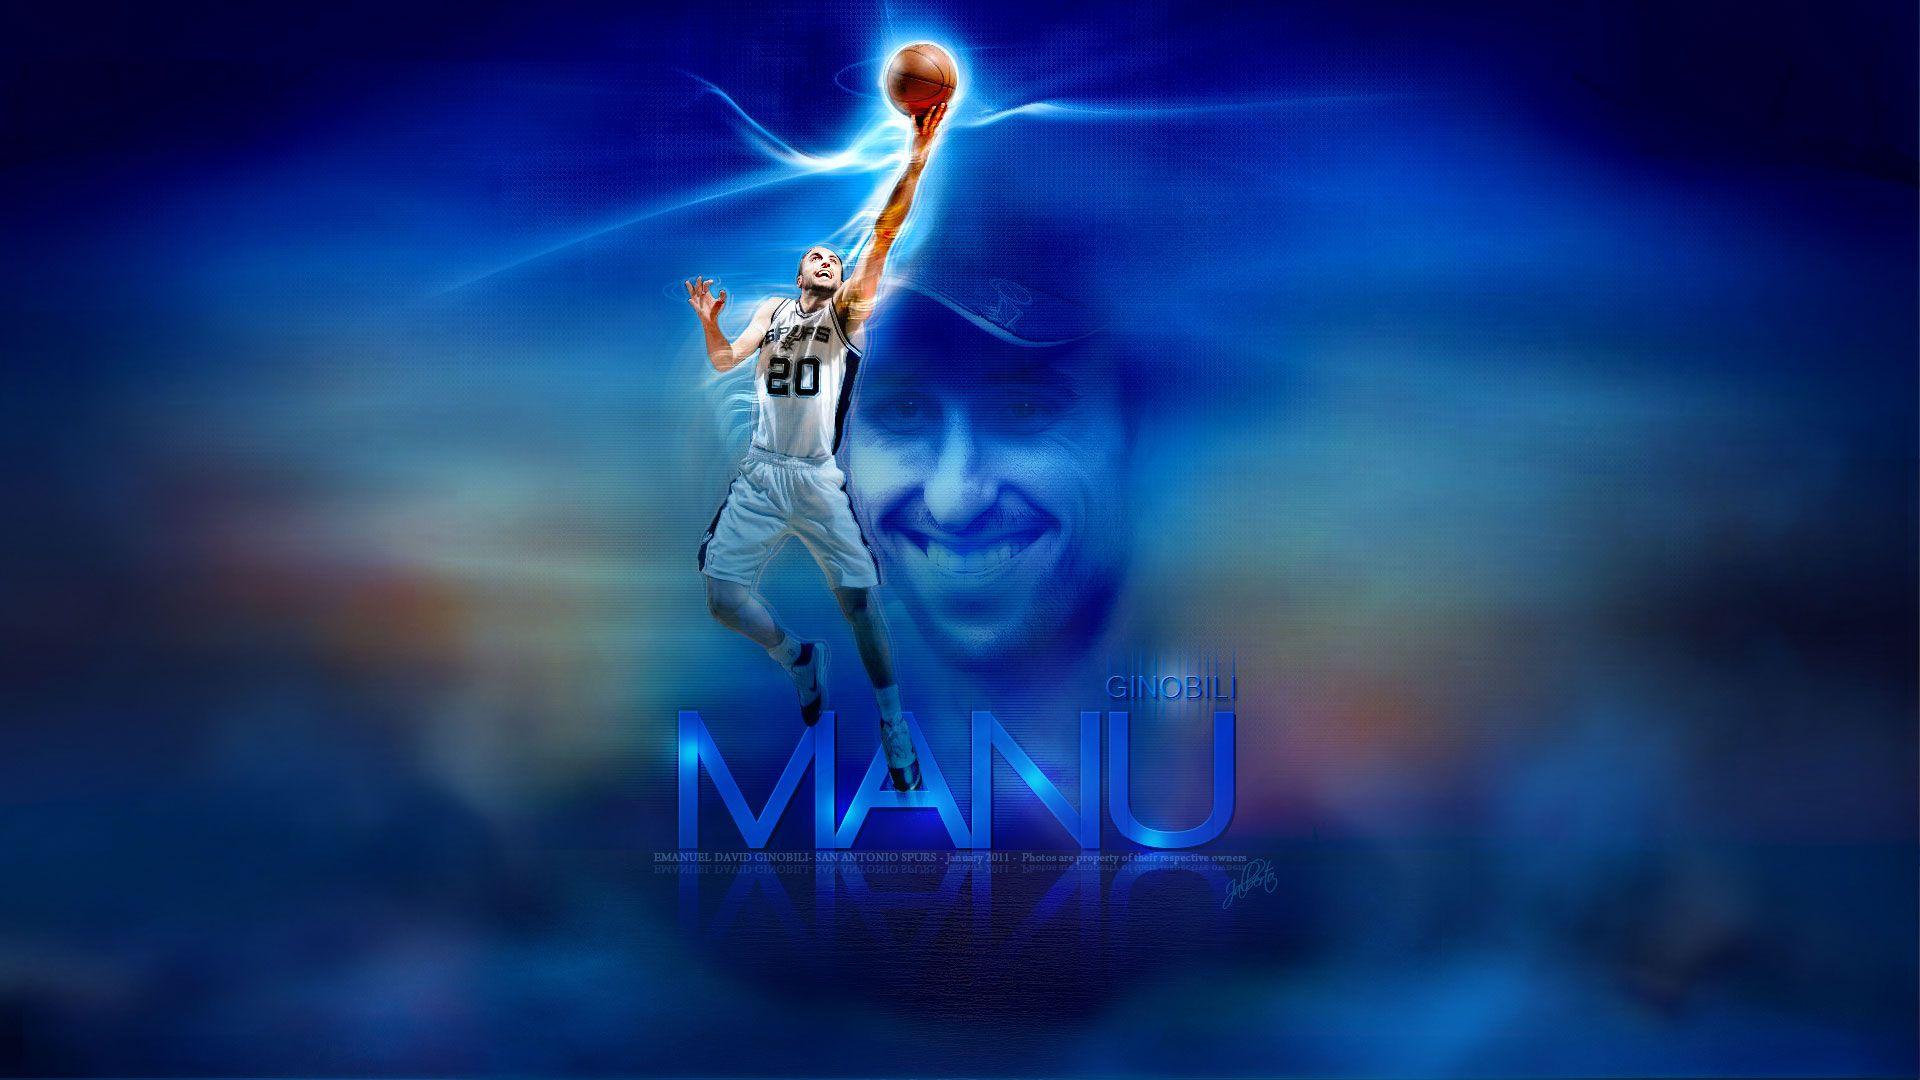 Manu Ginobili Spurs Layup Widescreen Wallpaper. Basketball